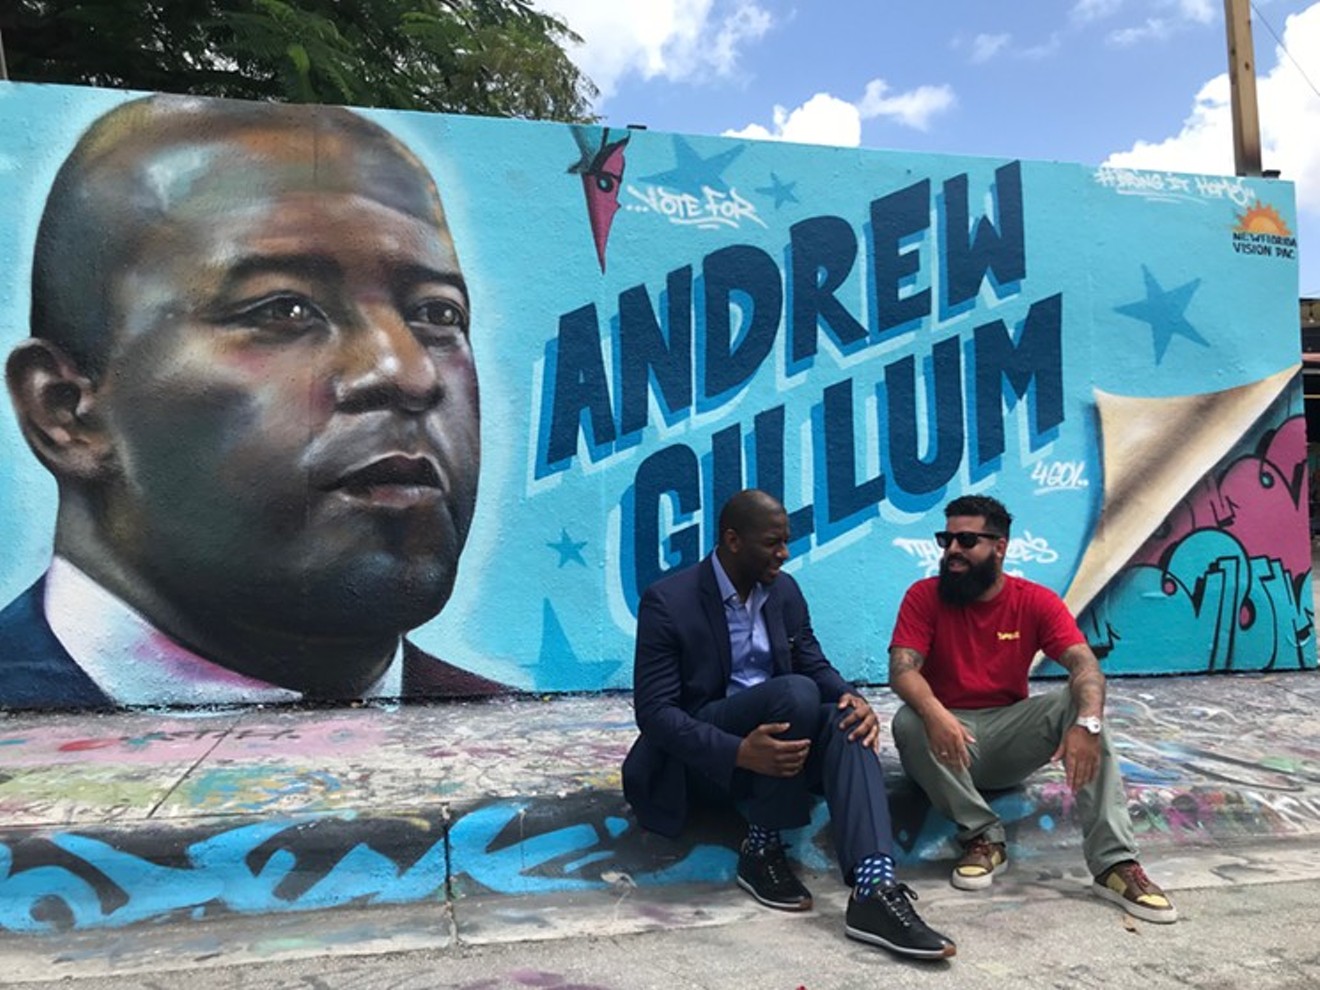 Florida gubernatorial candidate Andrew Gillum and artist Disem.